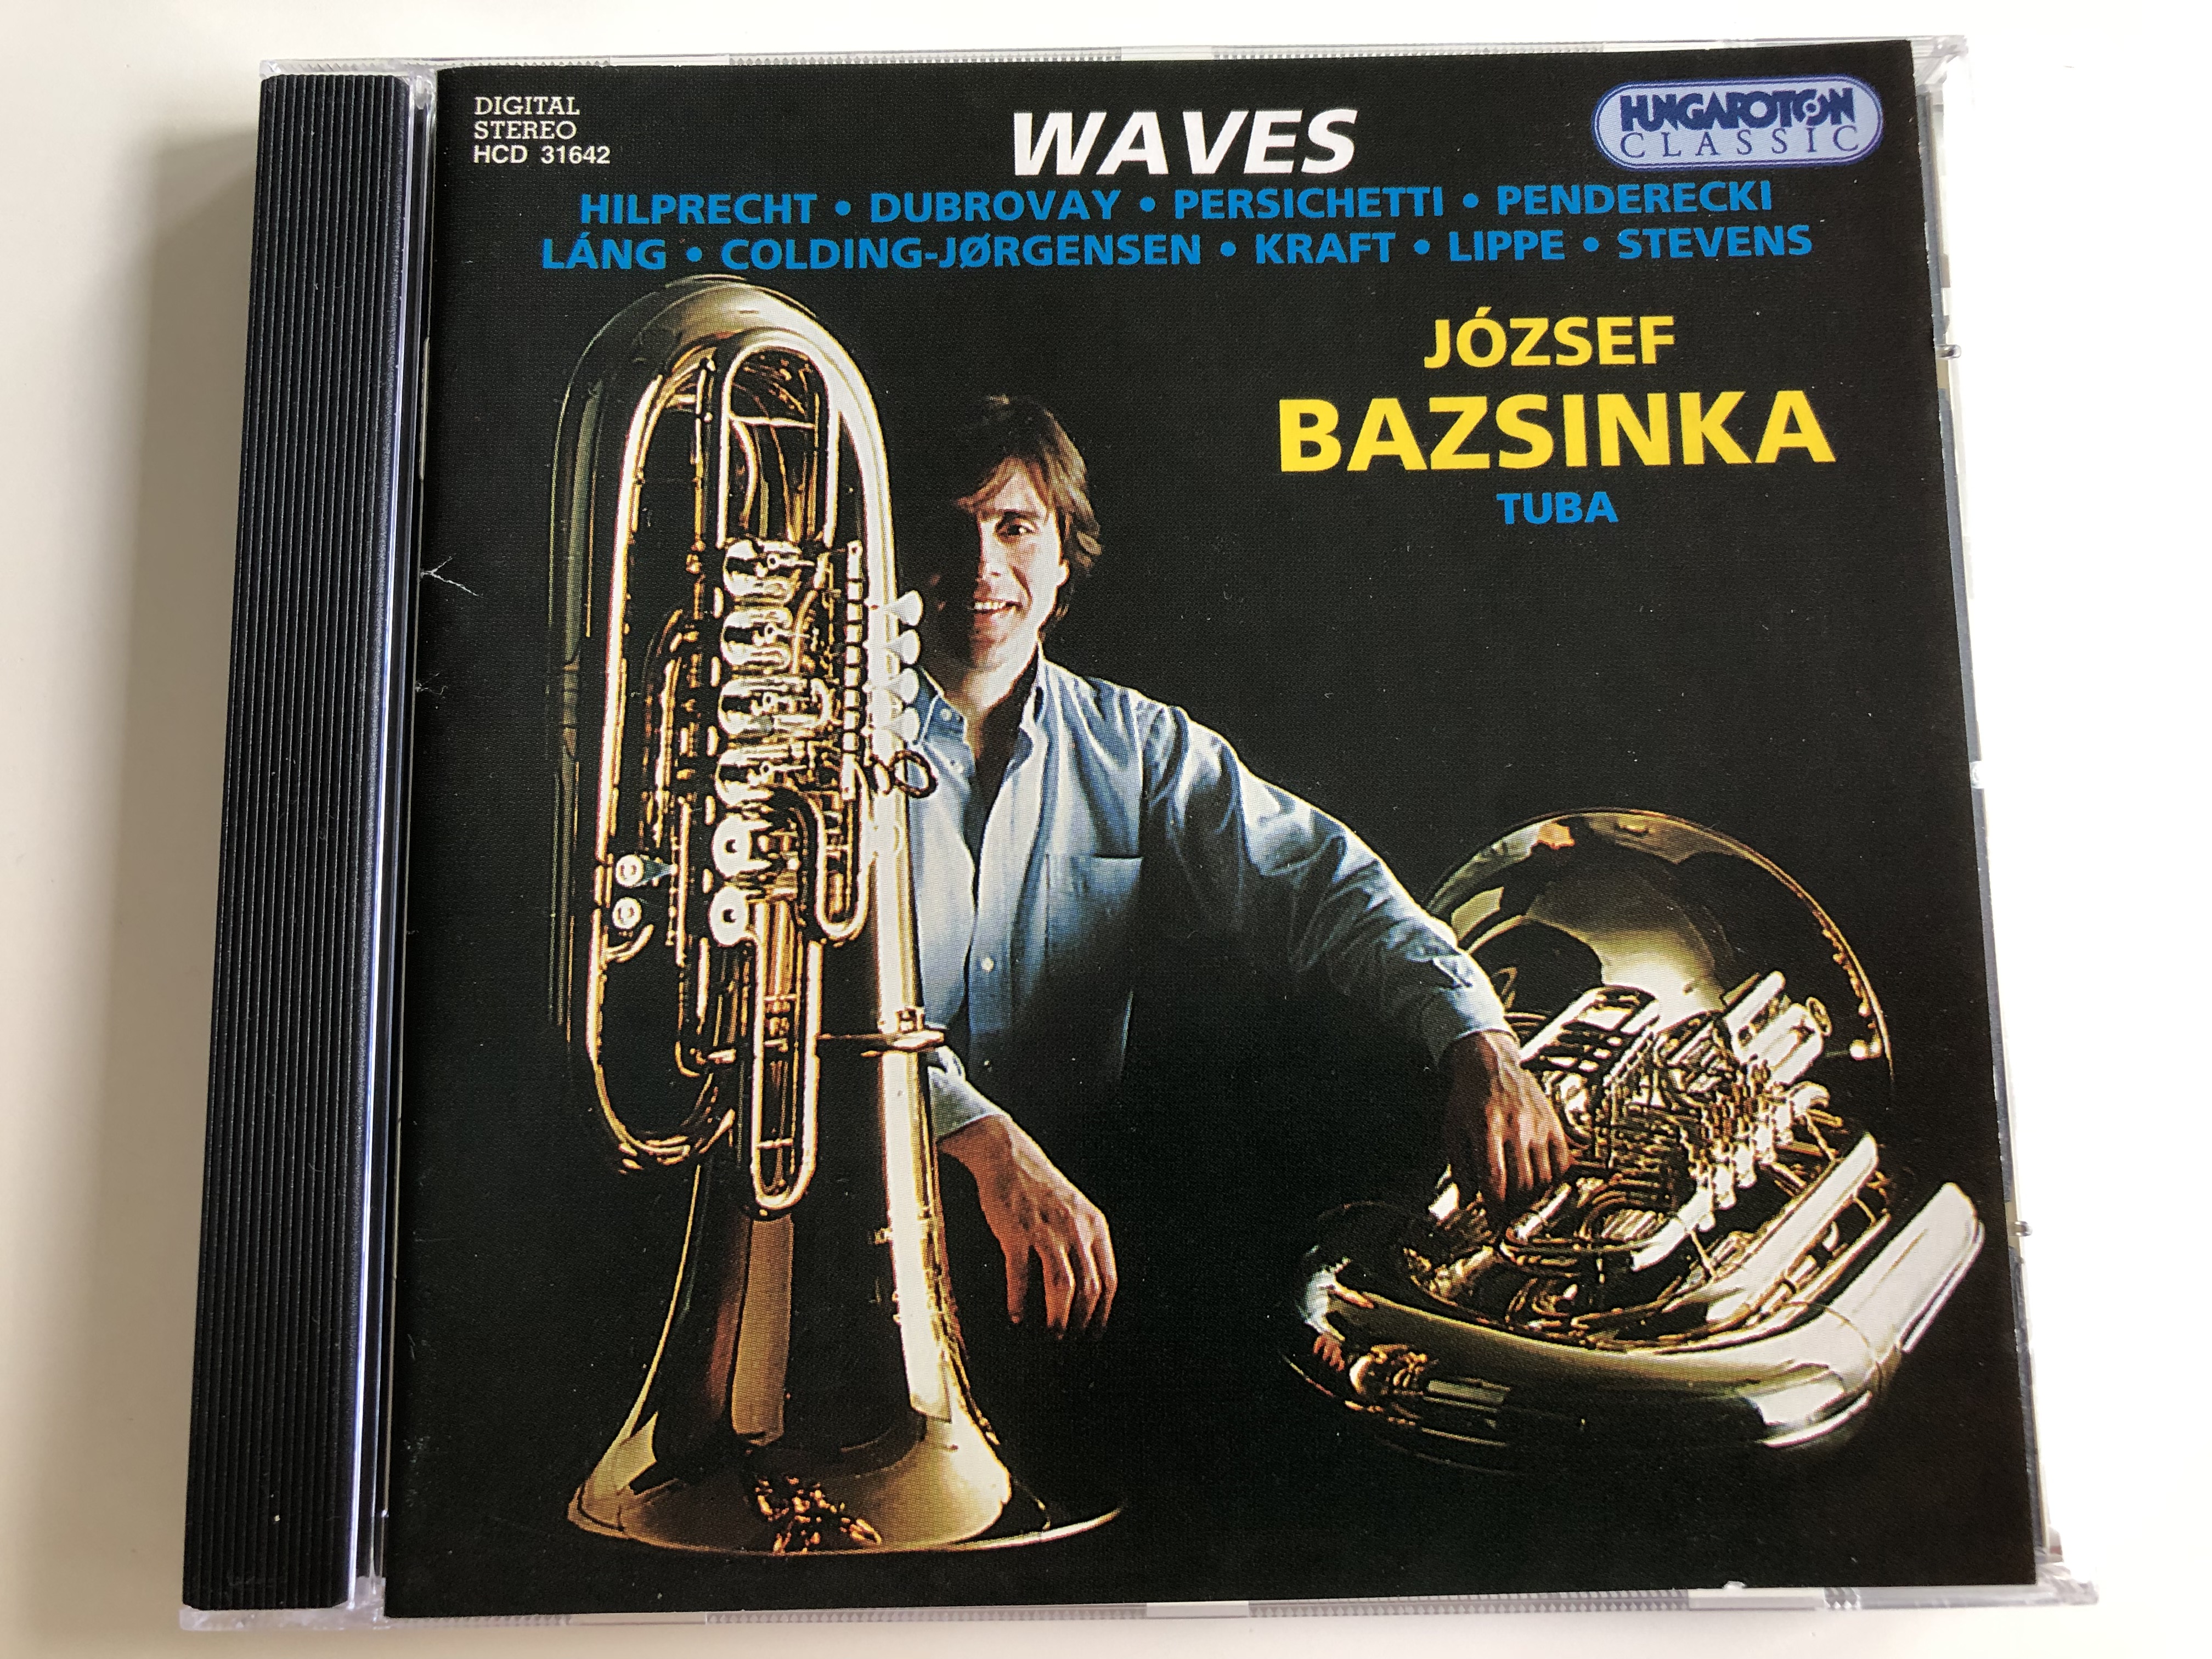 waves-j-zsef-bazsinka-tuba-hilprecht-dubrovay-persichetti-penderecki-l-ng-colding-jorgensen-kraft-lippe-stevens-audio-cd-1996-hungaroton-hcd-31642-1-.jpg